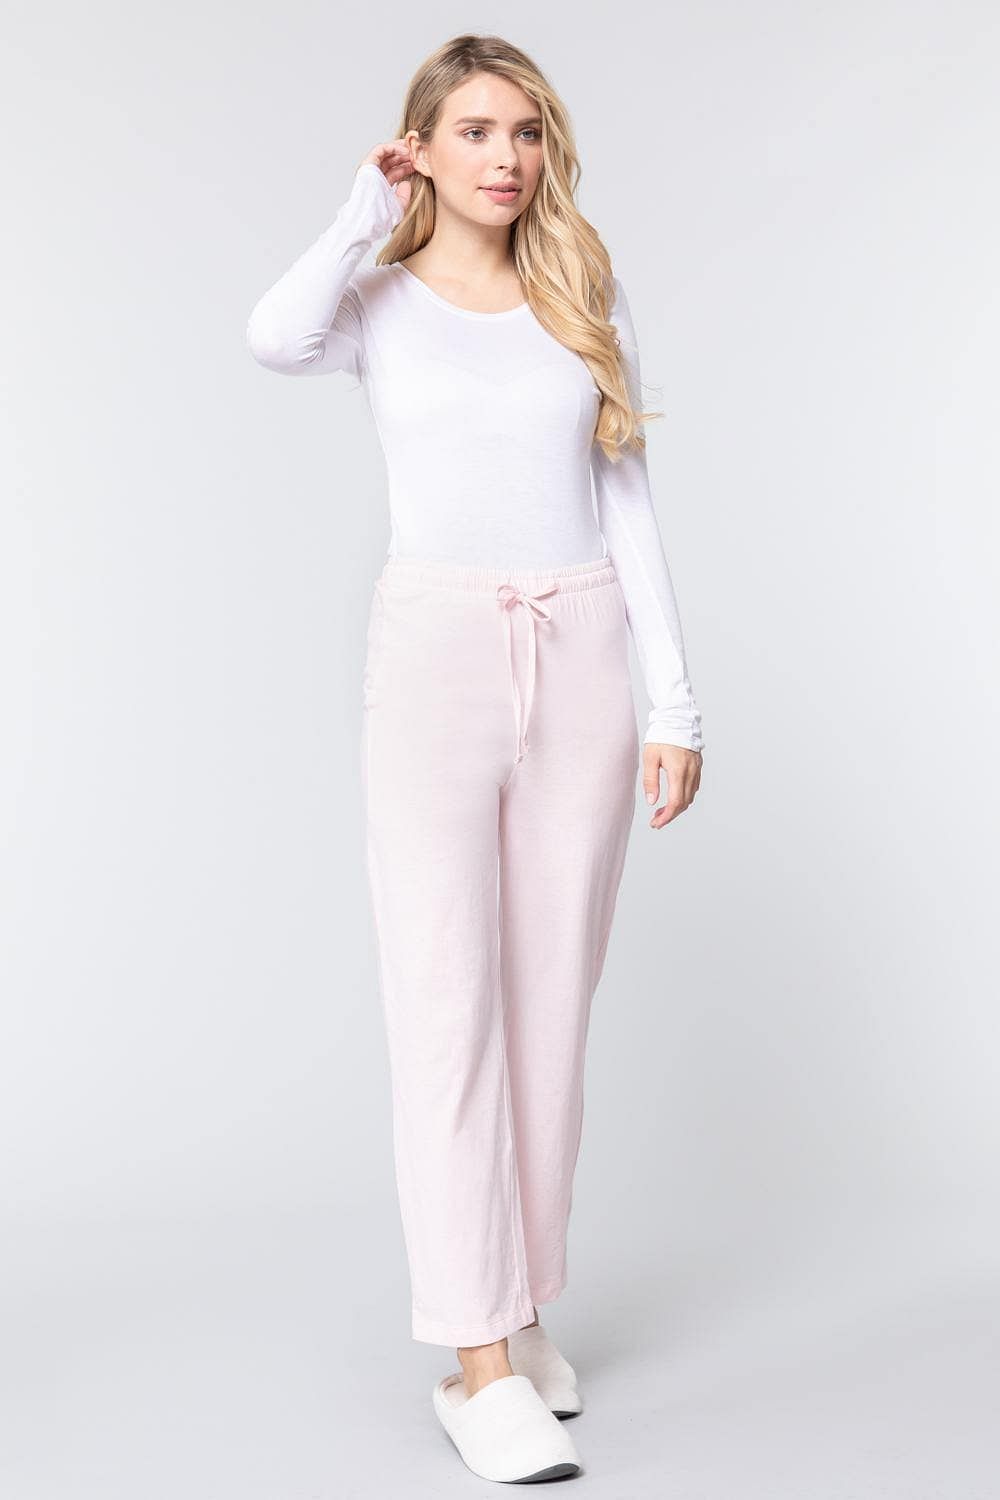 Cotton Pajama Pants-Light Pink - Shopping Therapy, LLC 